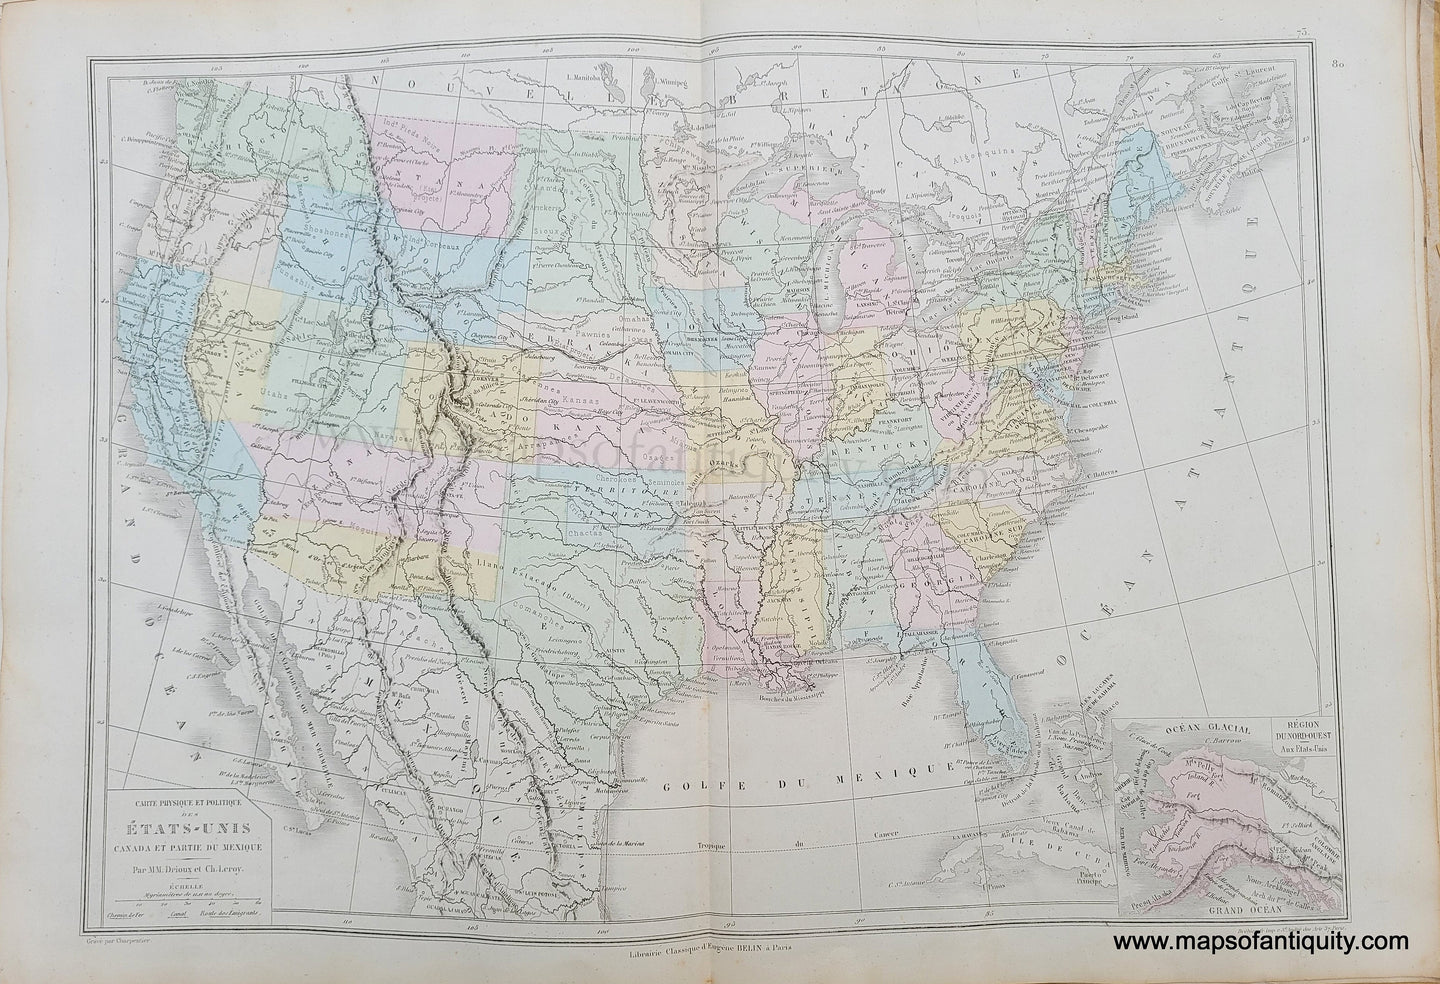 Genuine-Antique-Map-Carte-Physique-et-Politique-des-Etats-Unis-,-Canada-et-partie-du-Mexique--Physical-and-Political-Map-of-the-United-States,-parts-of-Canada-and-Mexico-1875-Drioux-&-Leroy-USA403-Maps-Of-Antiquity